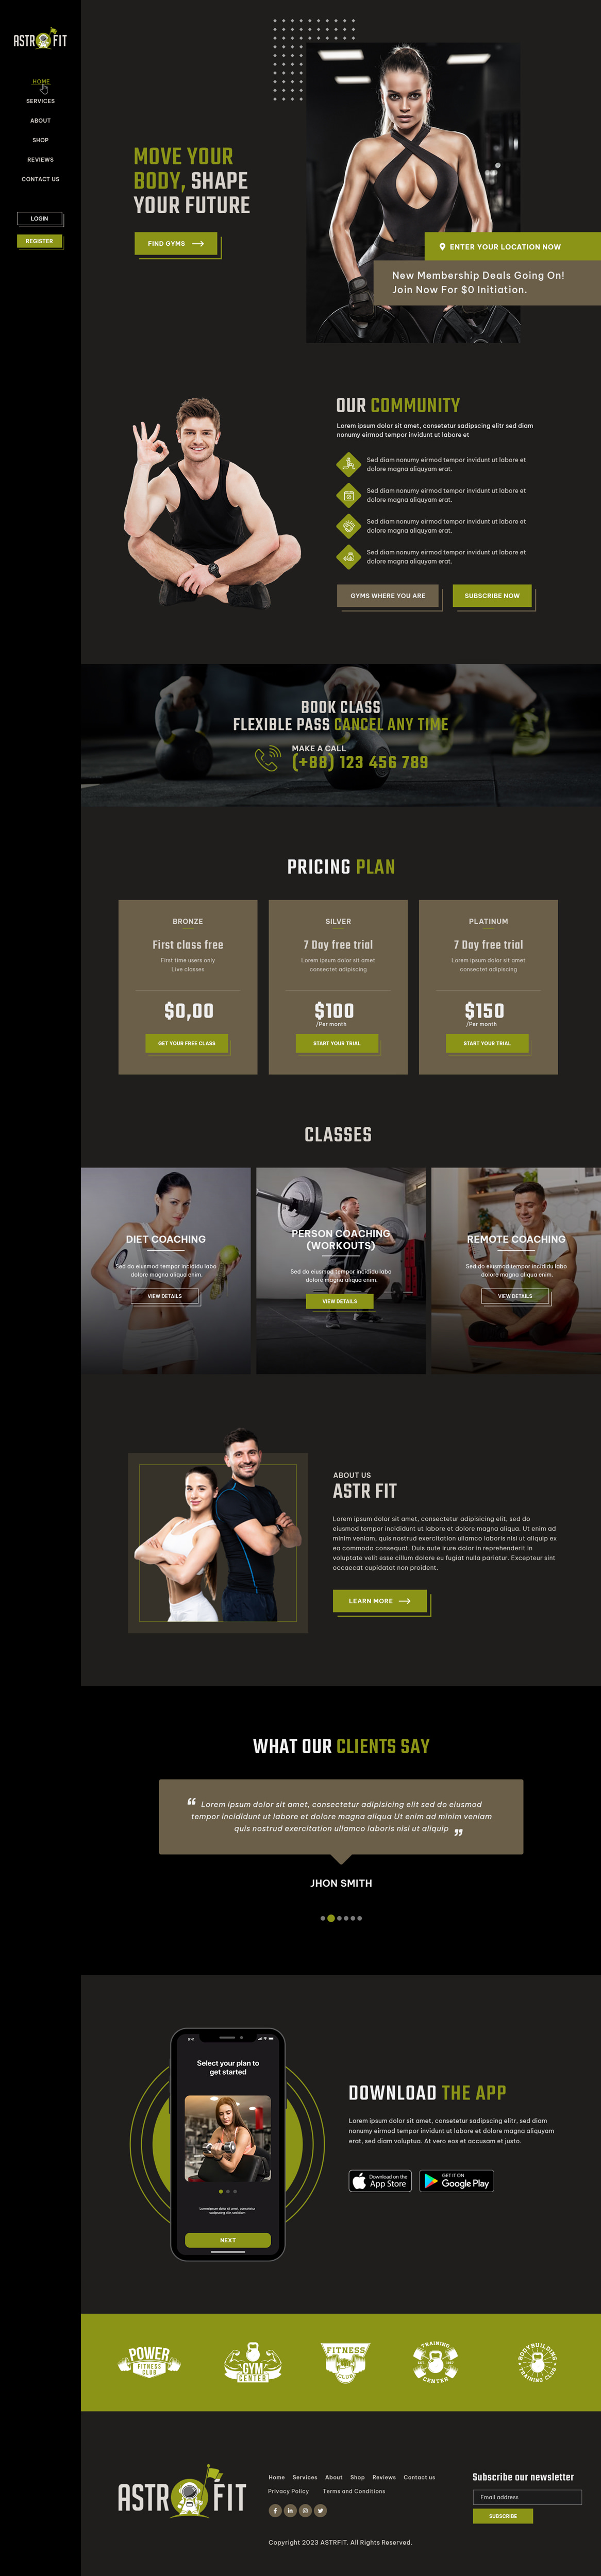 Personal Trainer website design example